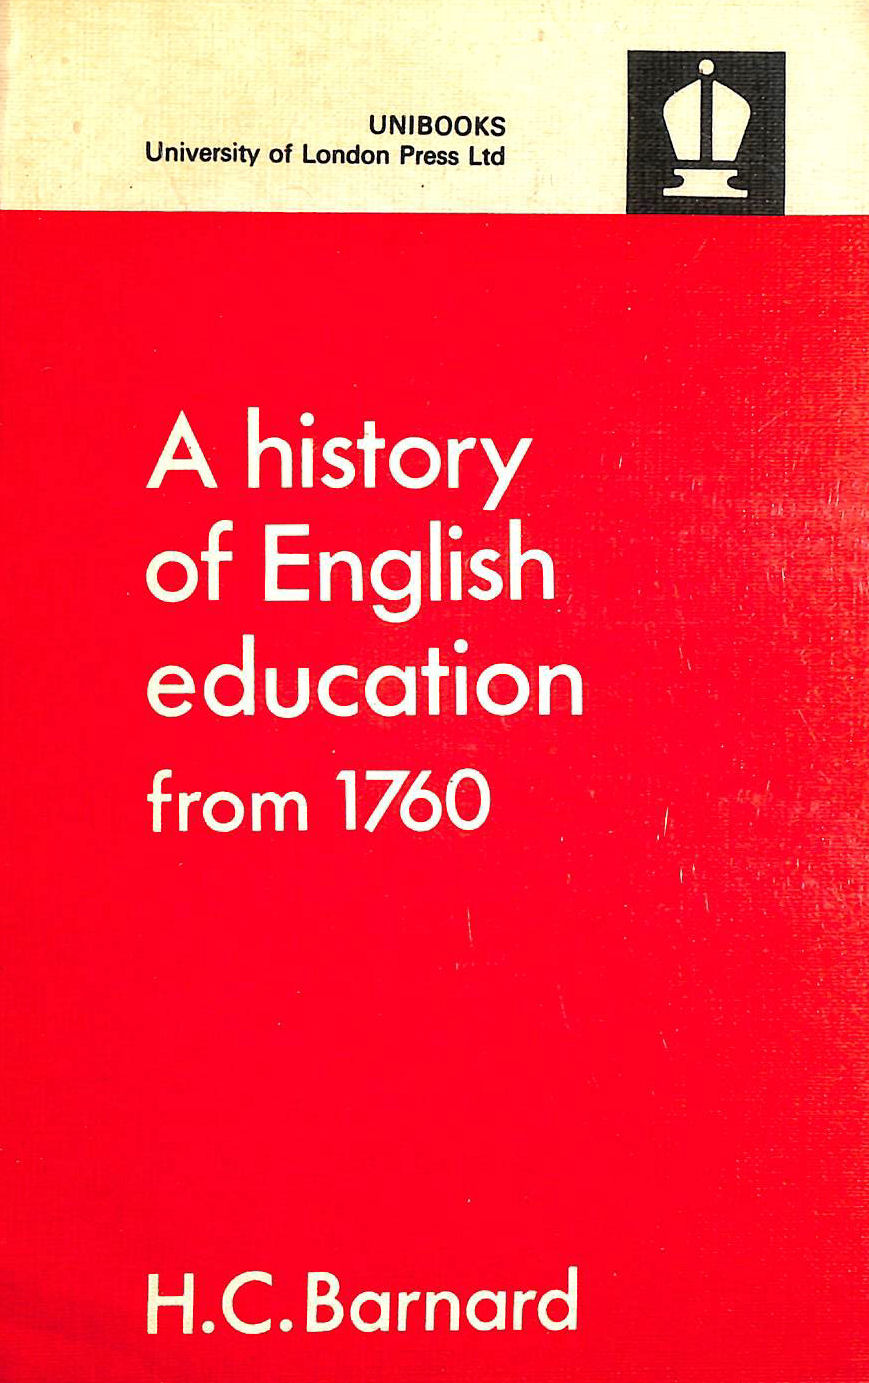 H C BARNARD - History of English Education from 1760 (Unibooks S.)